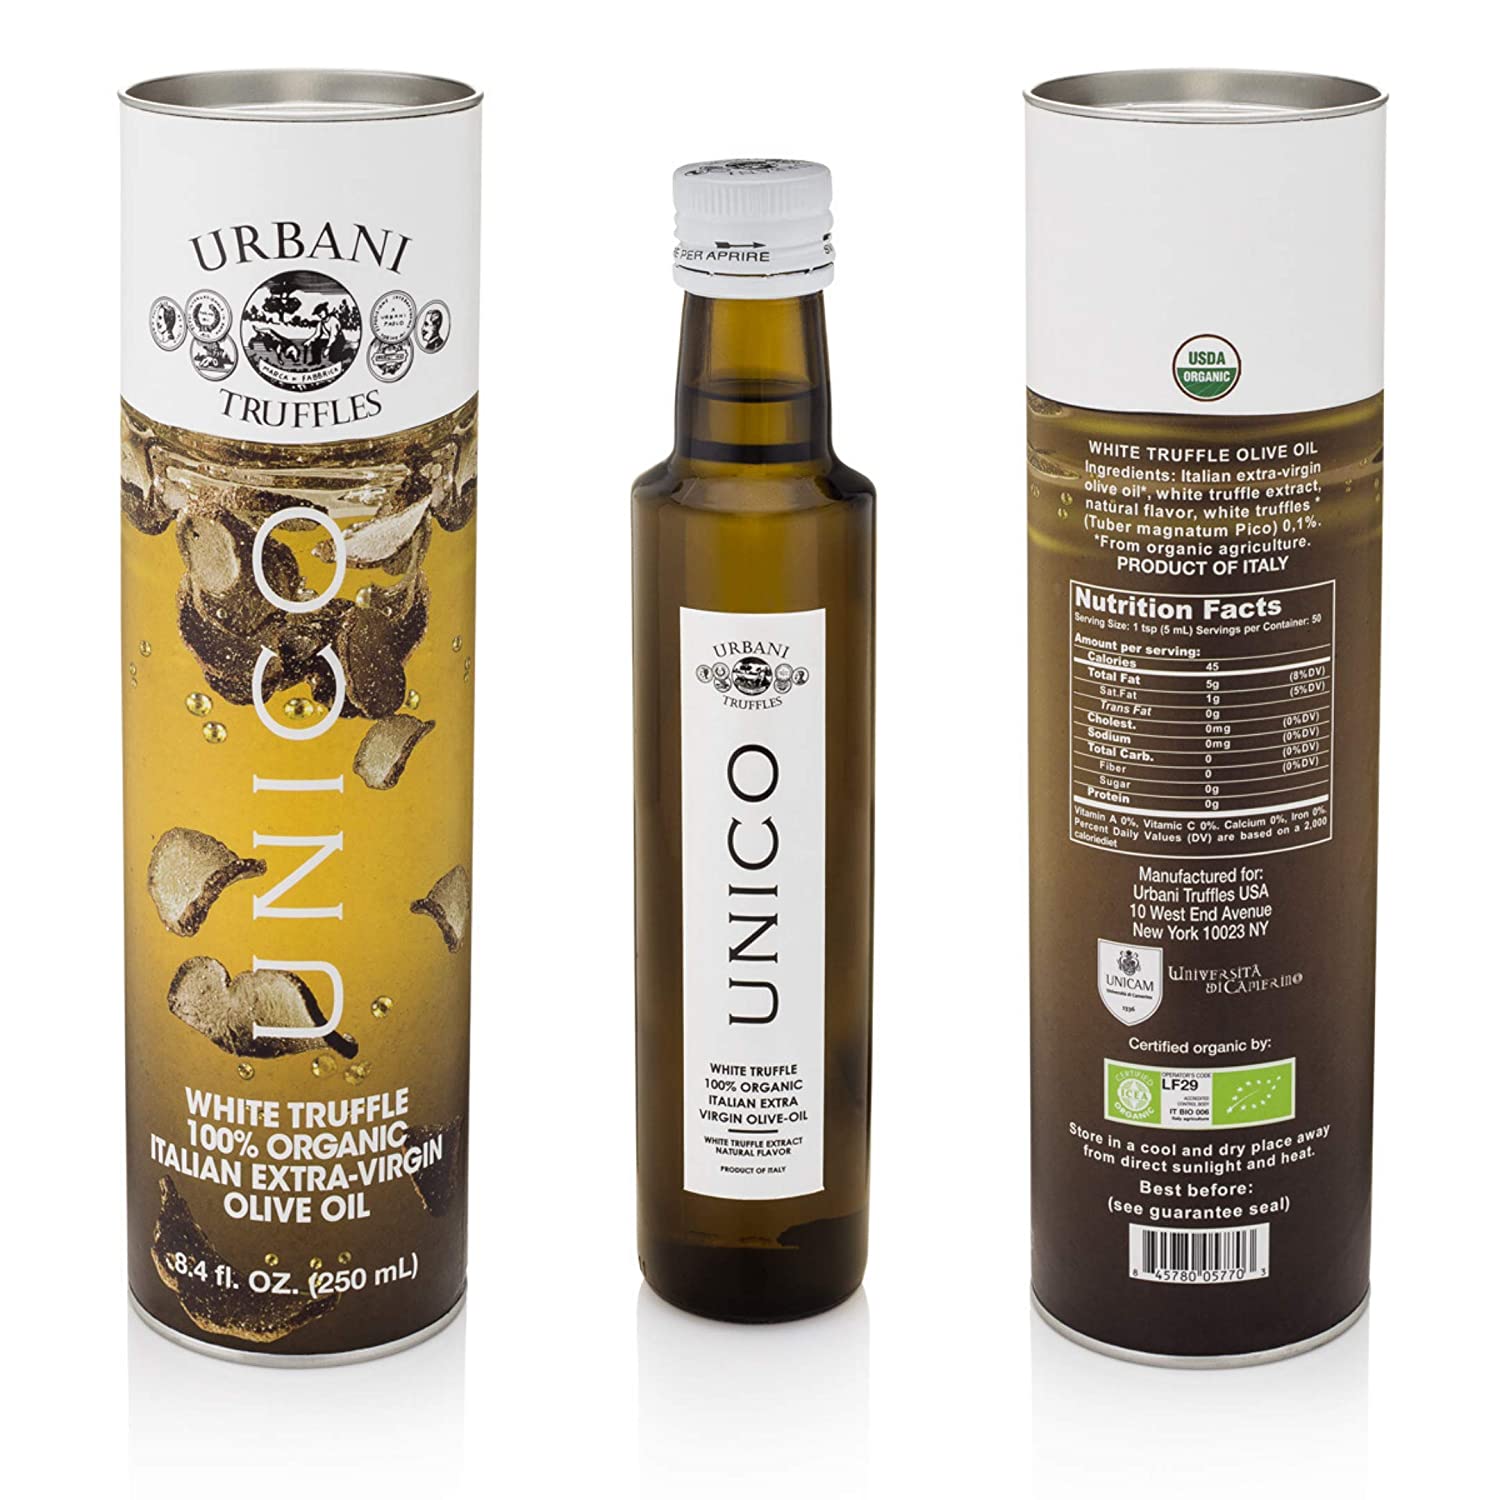 Italian White Truffle Extra Virgin Olive Oil - 8.4 Oz - by Urbani Truffles. Organic Truffle Oil 100% Made In Italy